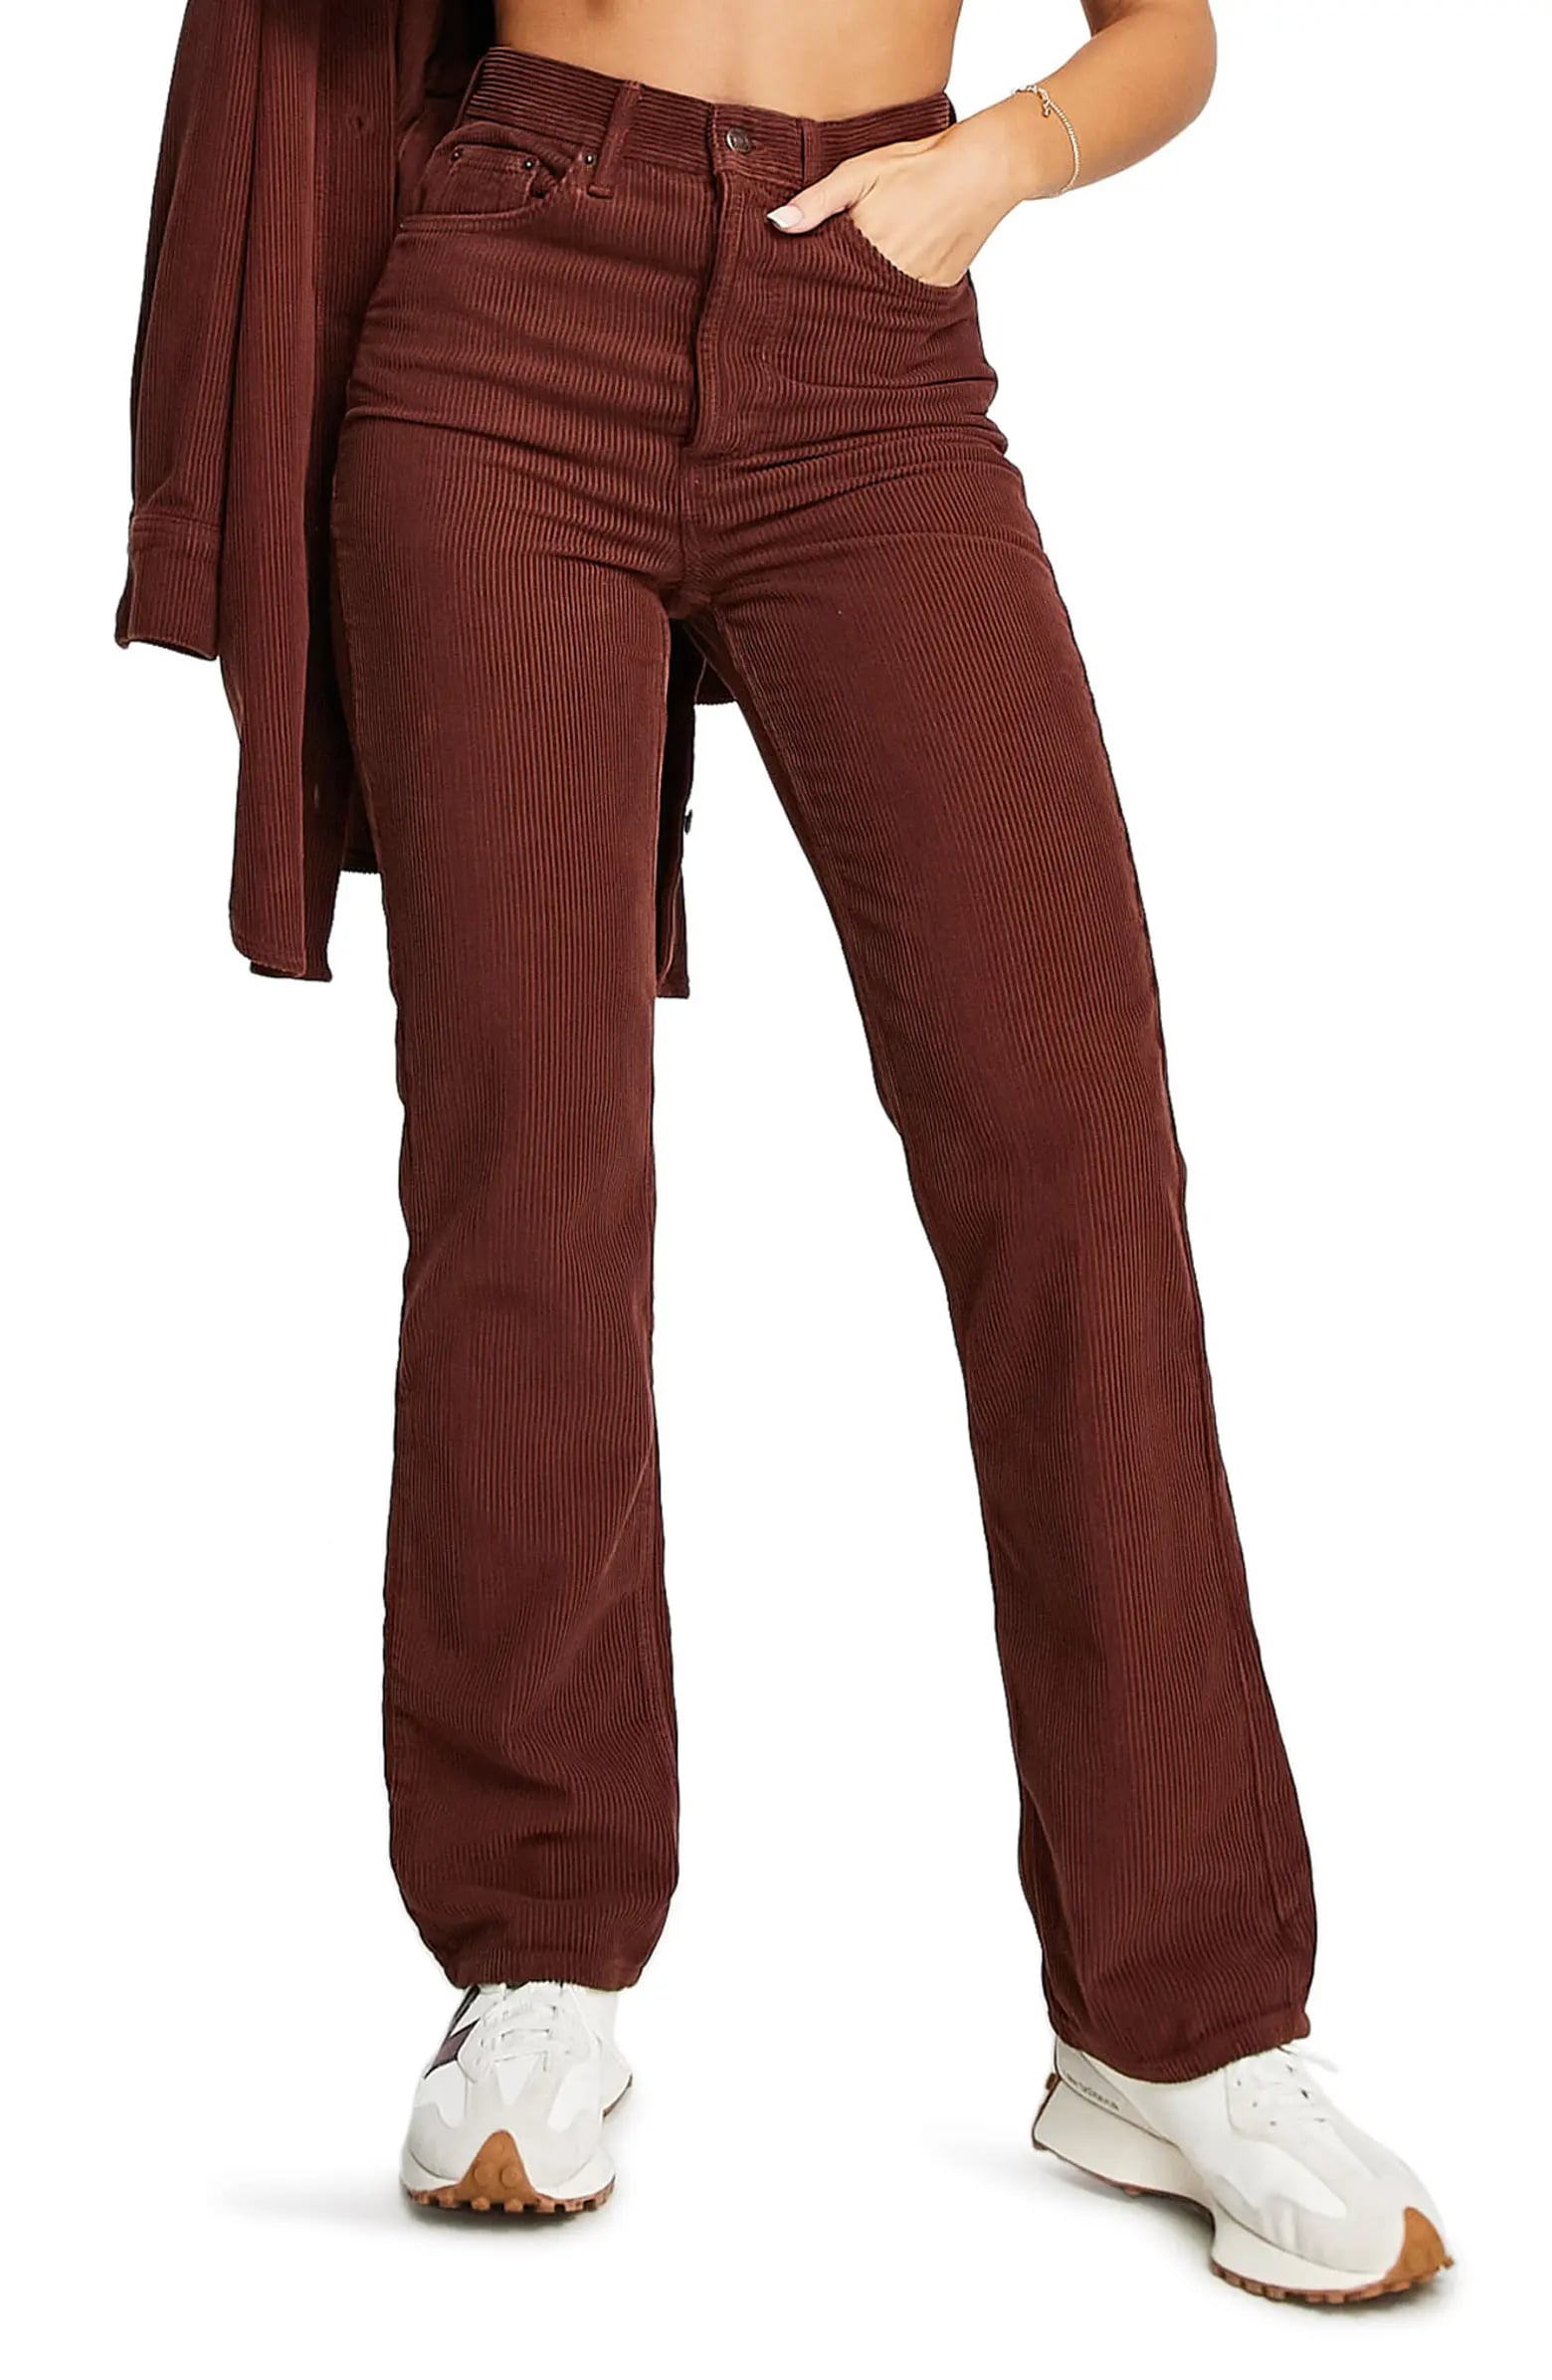 Best Corduroy Pants with Pockets: Topshop Kort High Waist Corduroy